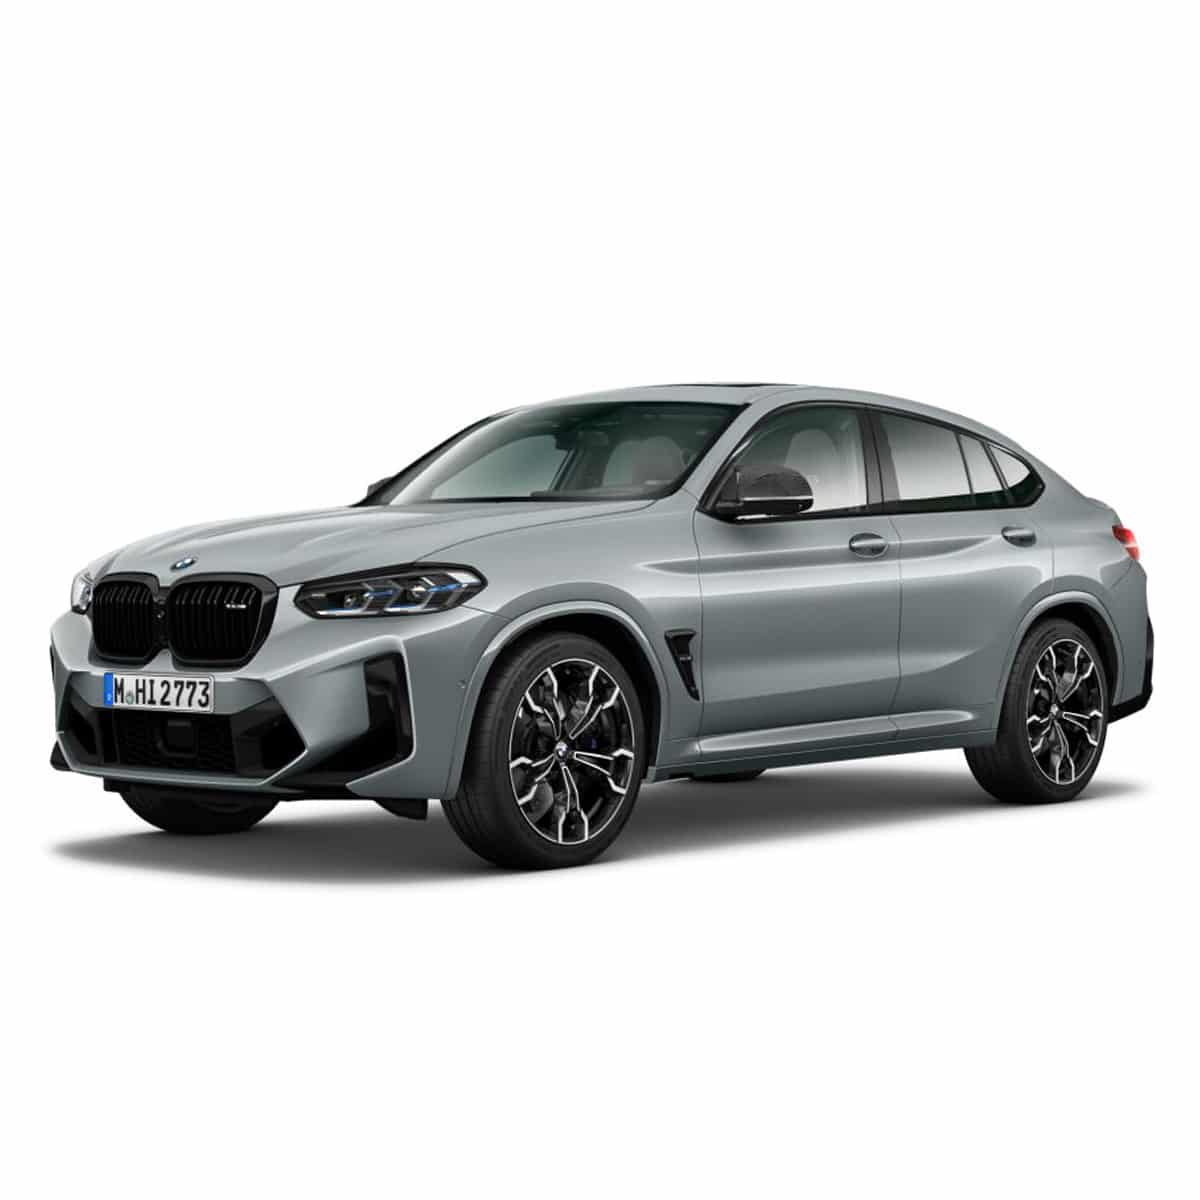 https://automag.de/app/uploads/2022/04/BMW-X4-m-automobile-quadratisch.jpg